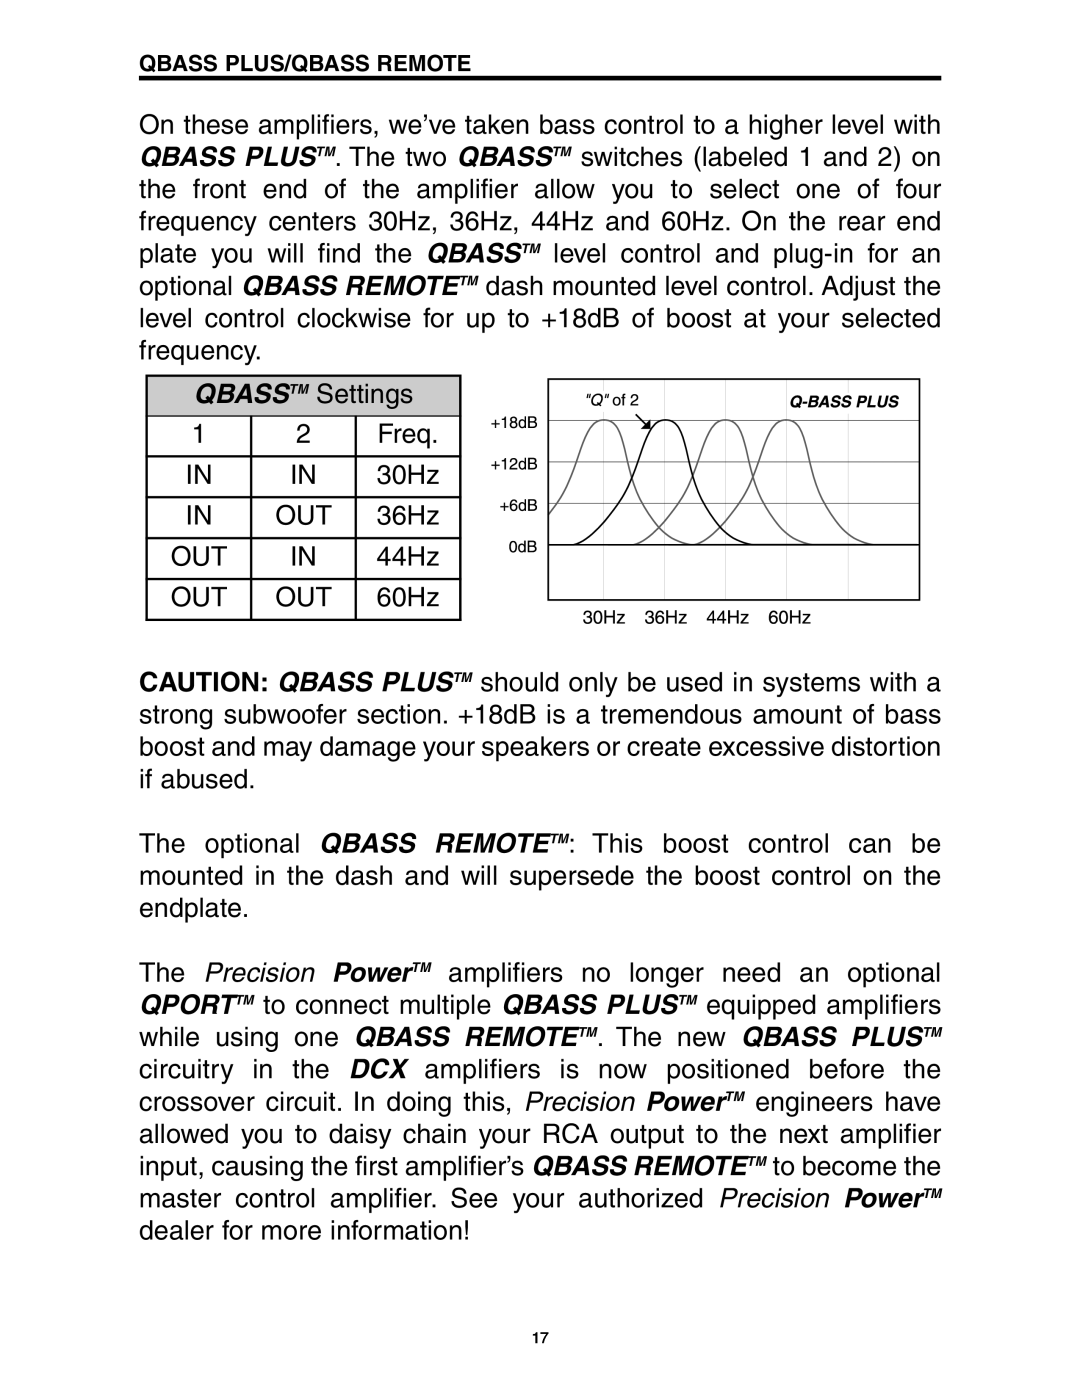 Precision Power D500/1, D2000/1, D3000/1, D1000/1 manual QBASSTM Settings 